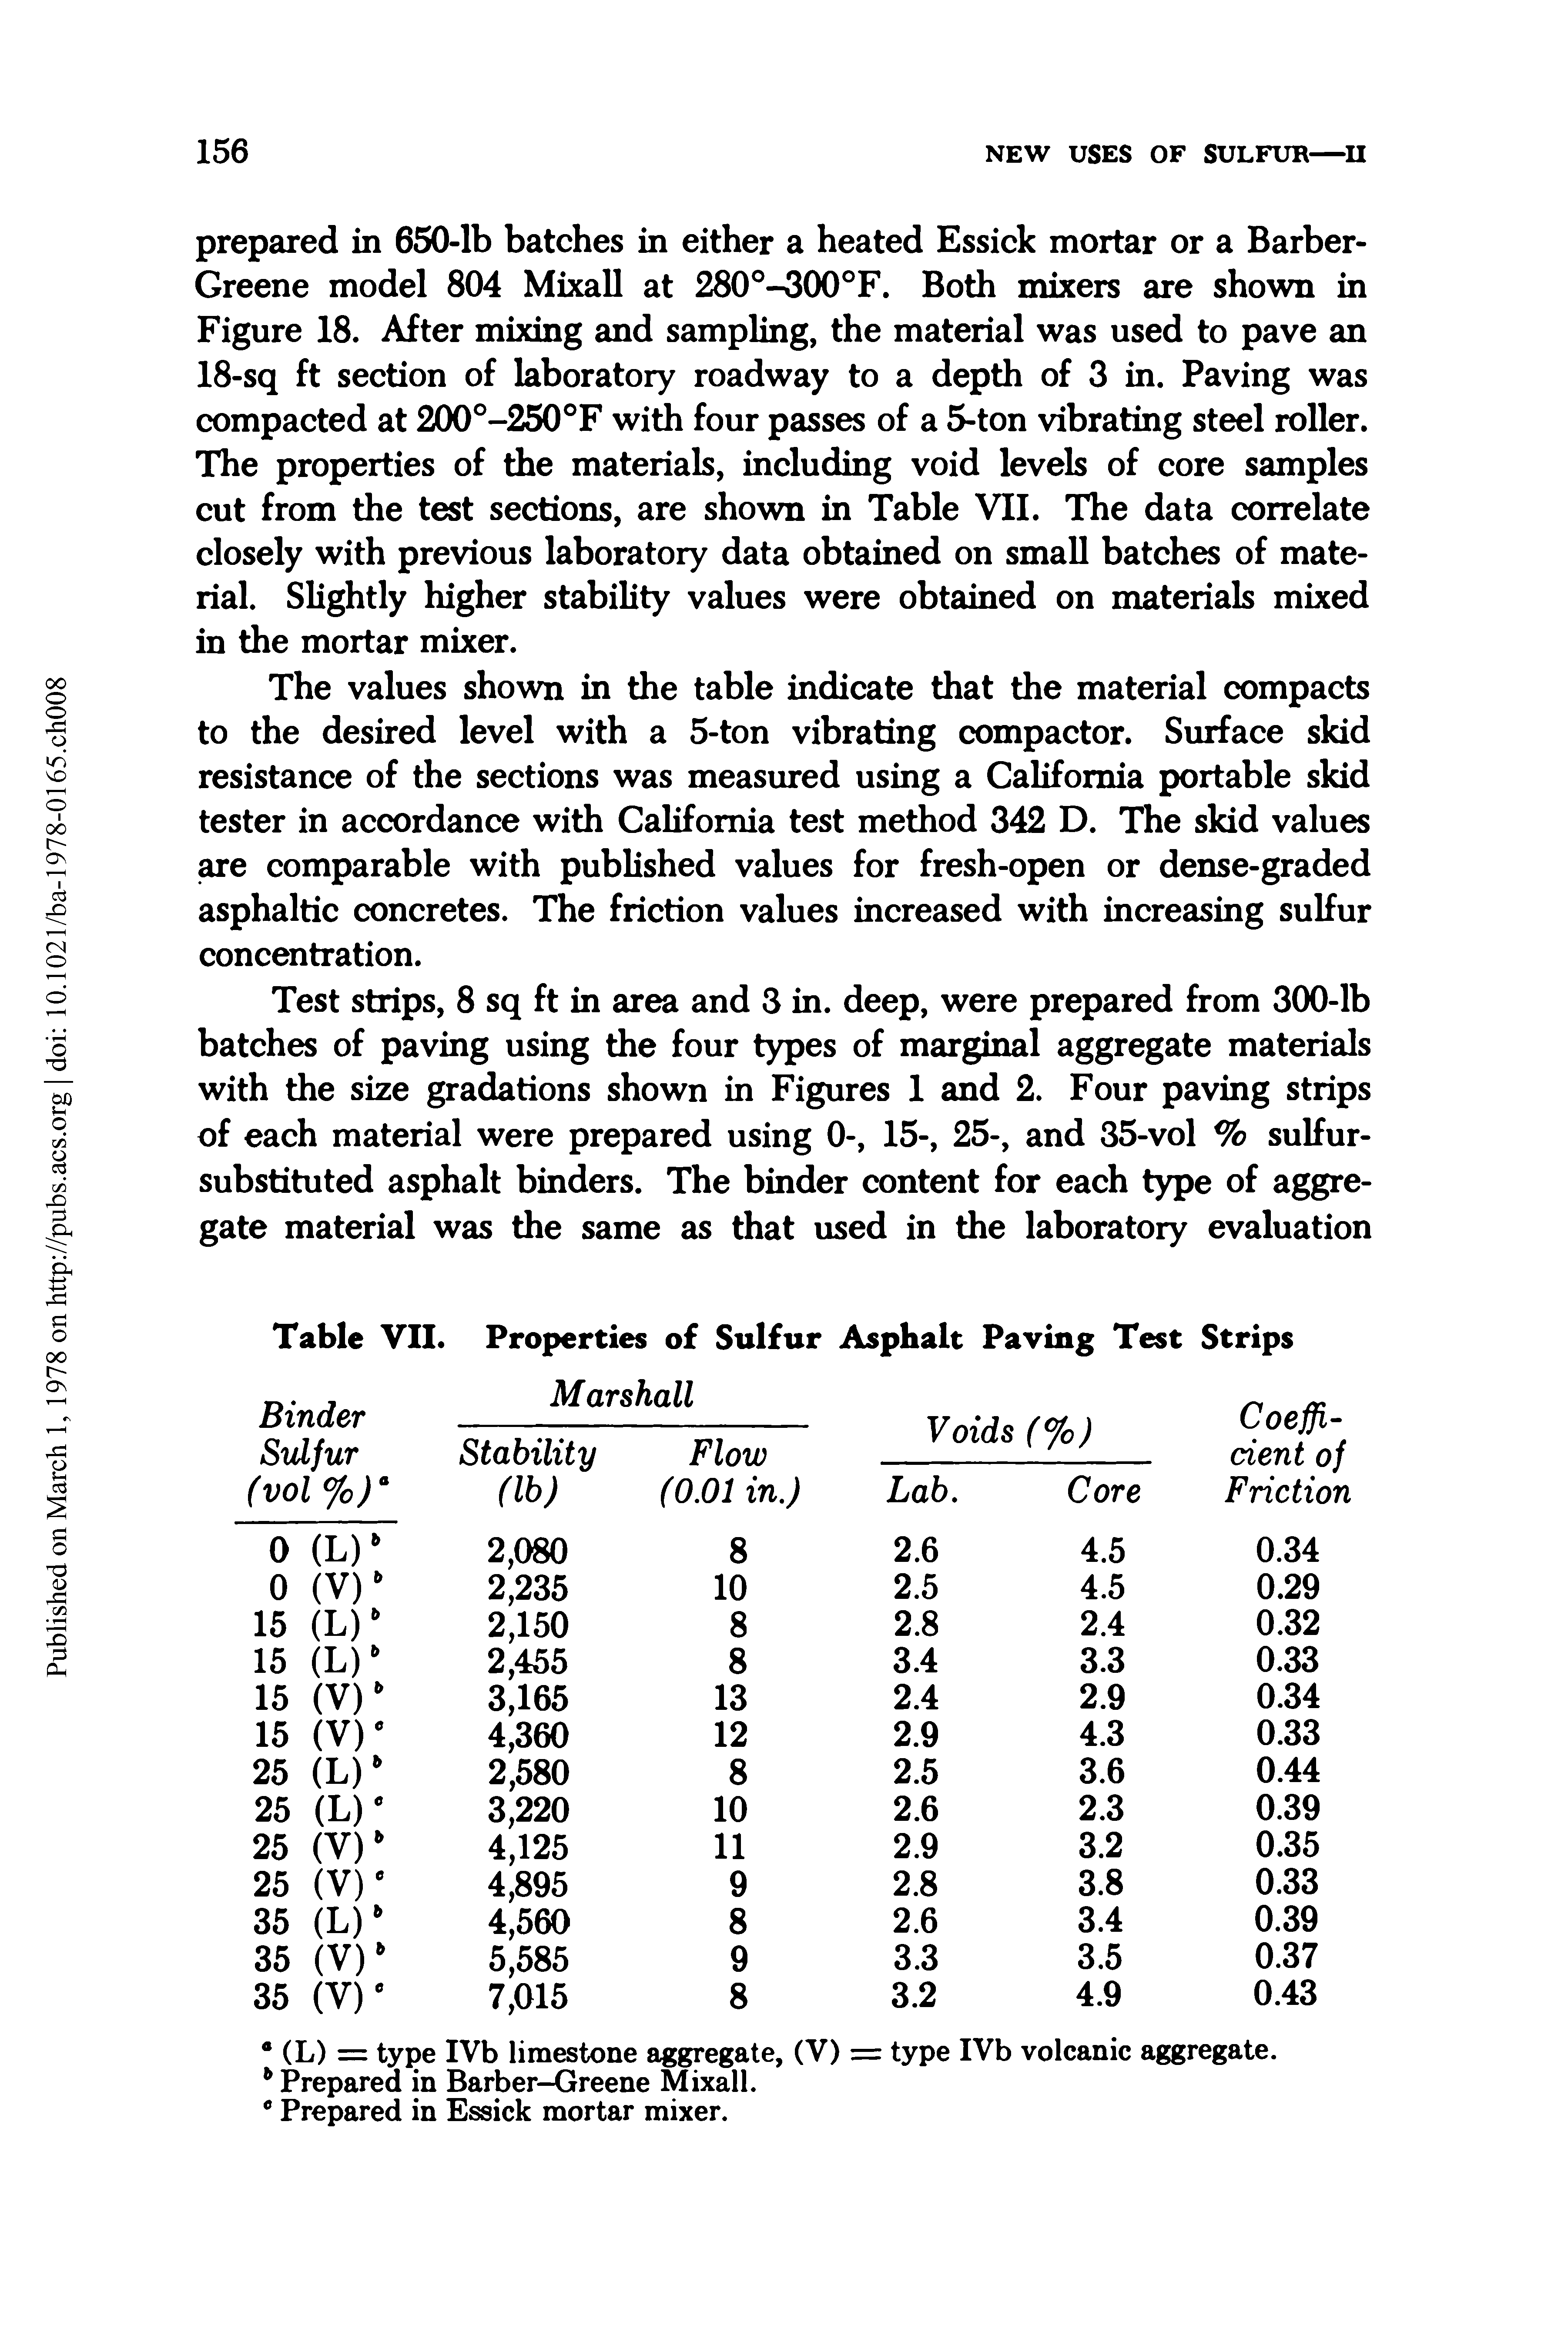 Table VII. Properties of Sulfur Asphalt Paving Test Strips...